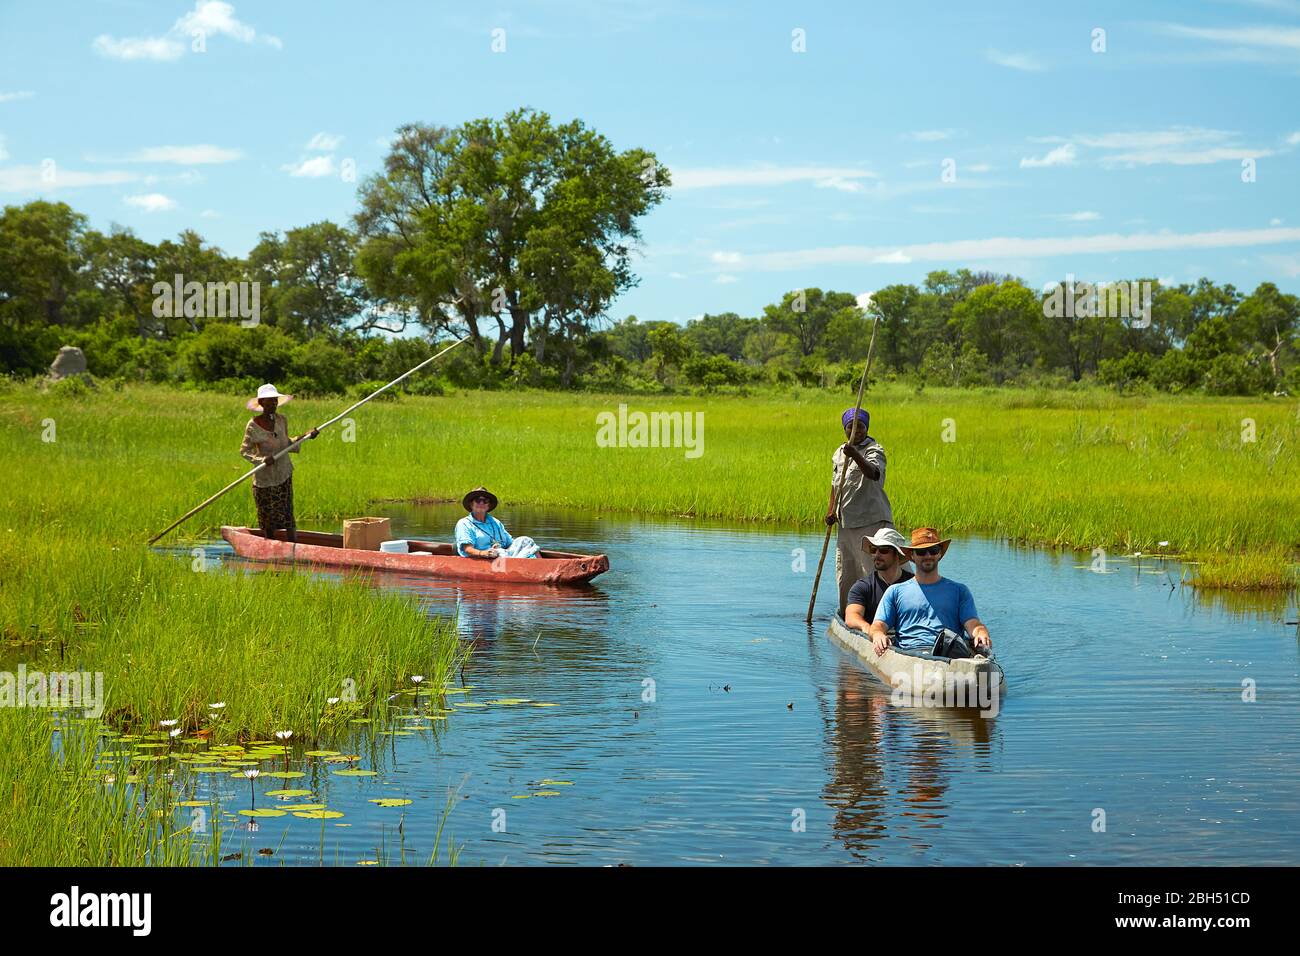 Turisti che vengono poled in mokoros (canoe dugout), Delta Okavango, Botswana, Africa Foto Stock